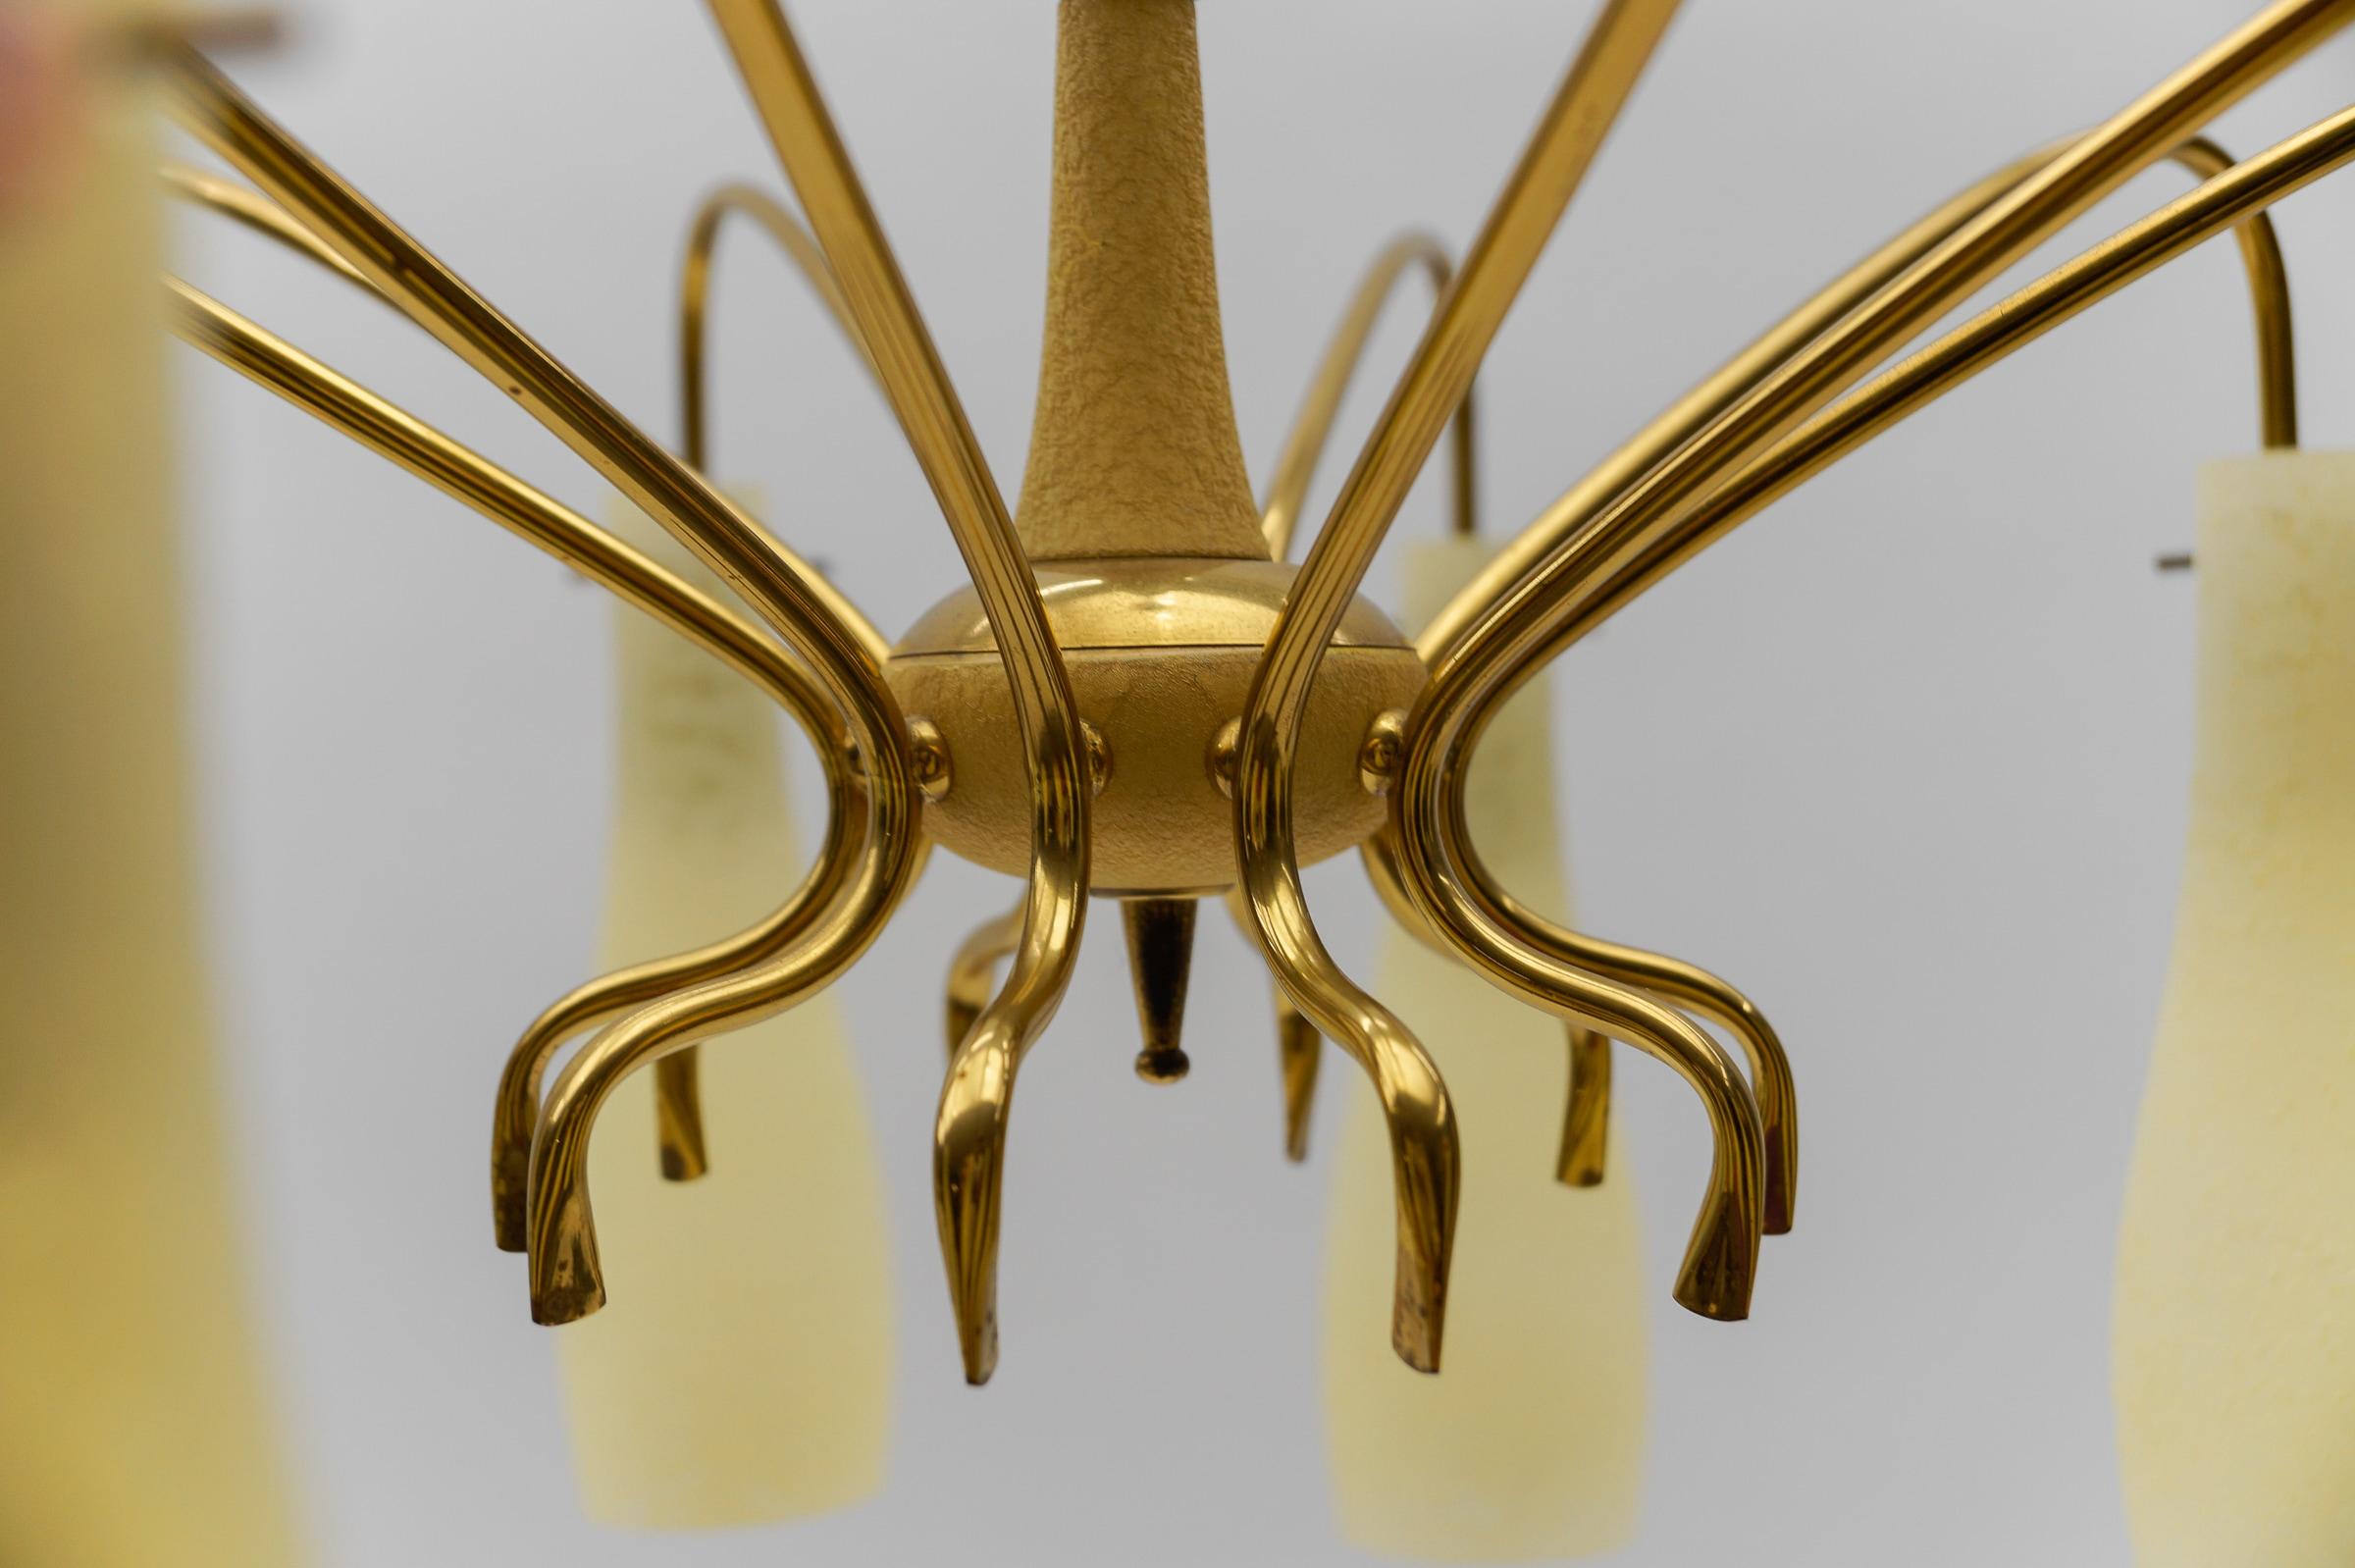 Brass & Glass Sputnik Chandelier with 10 Lights, 1950s Italy For Sale 6